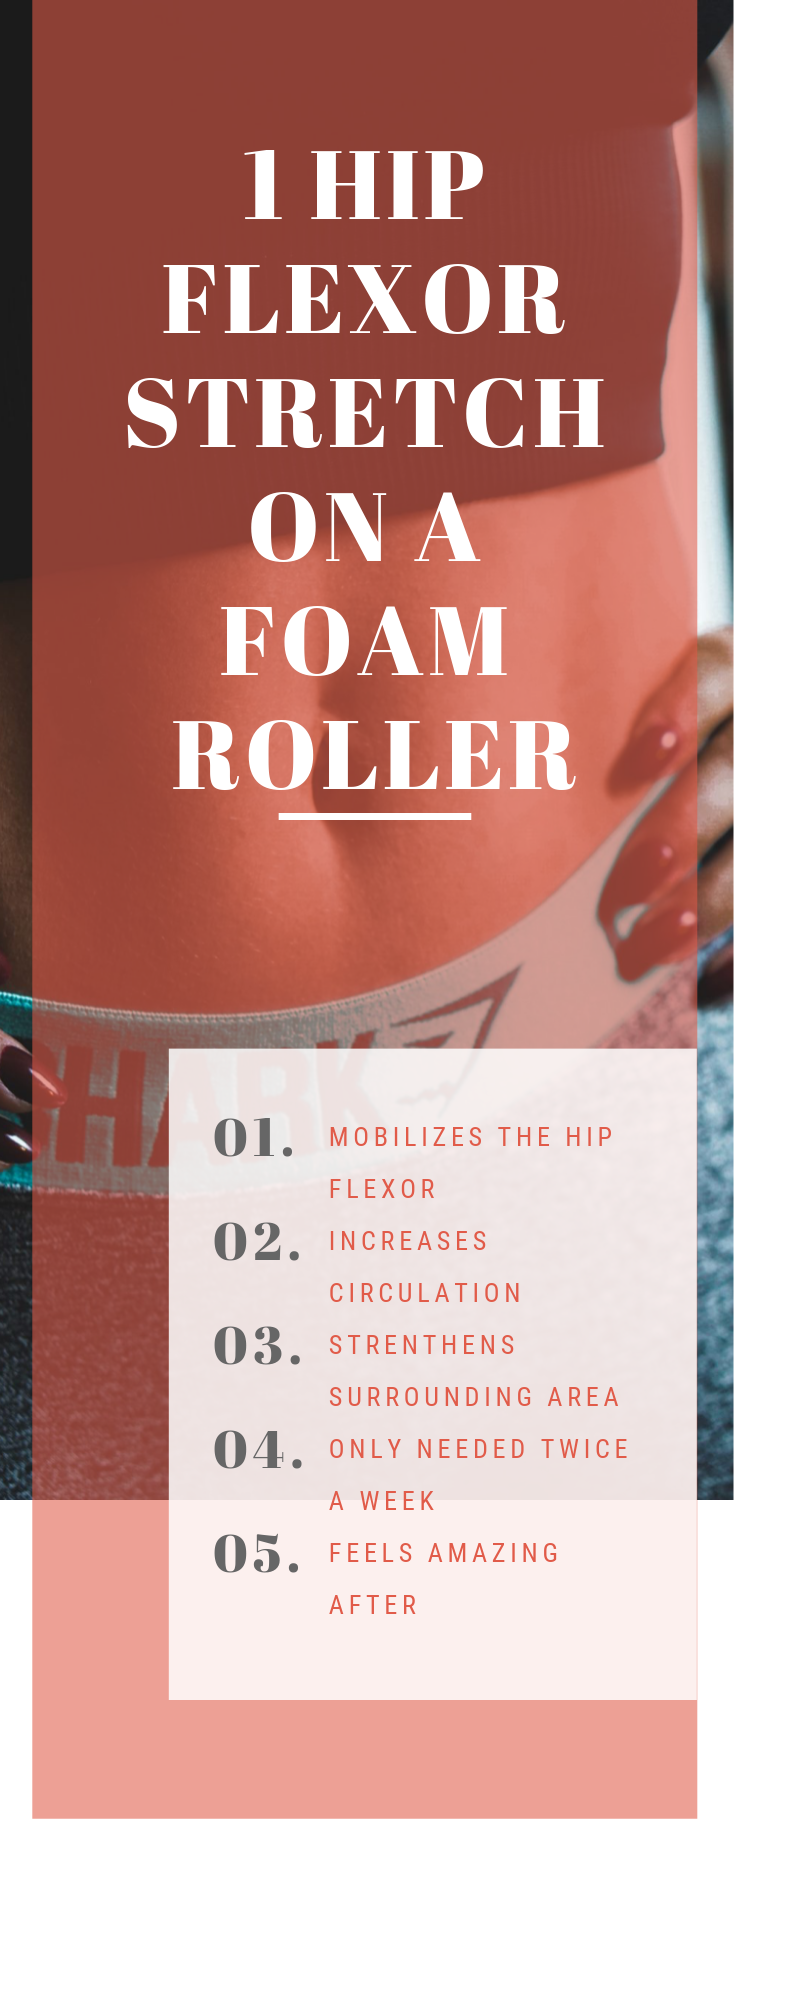 Hip flexor stretch foam roller - Infographic